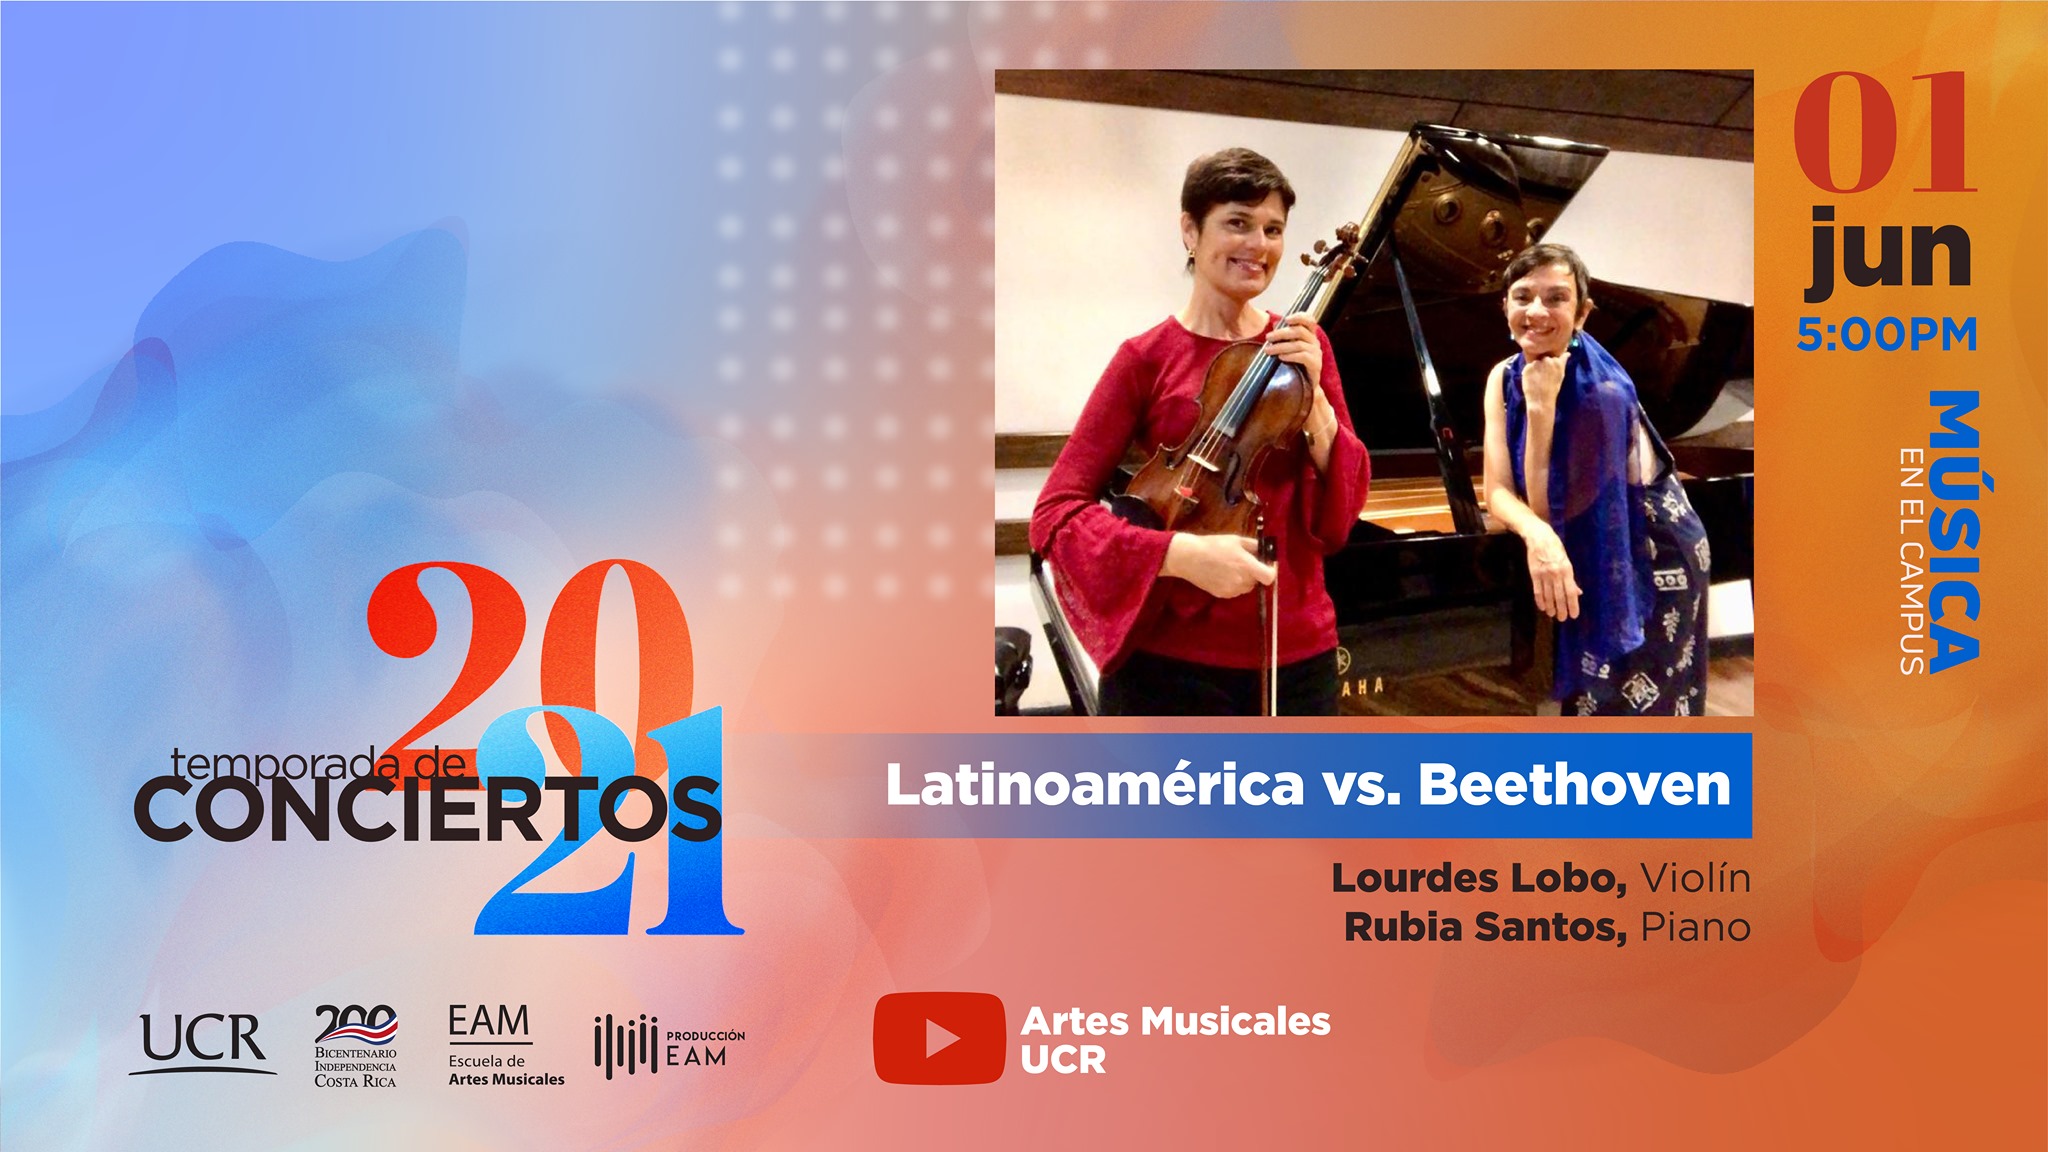 Latinoamérica vs. Beethoven